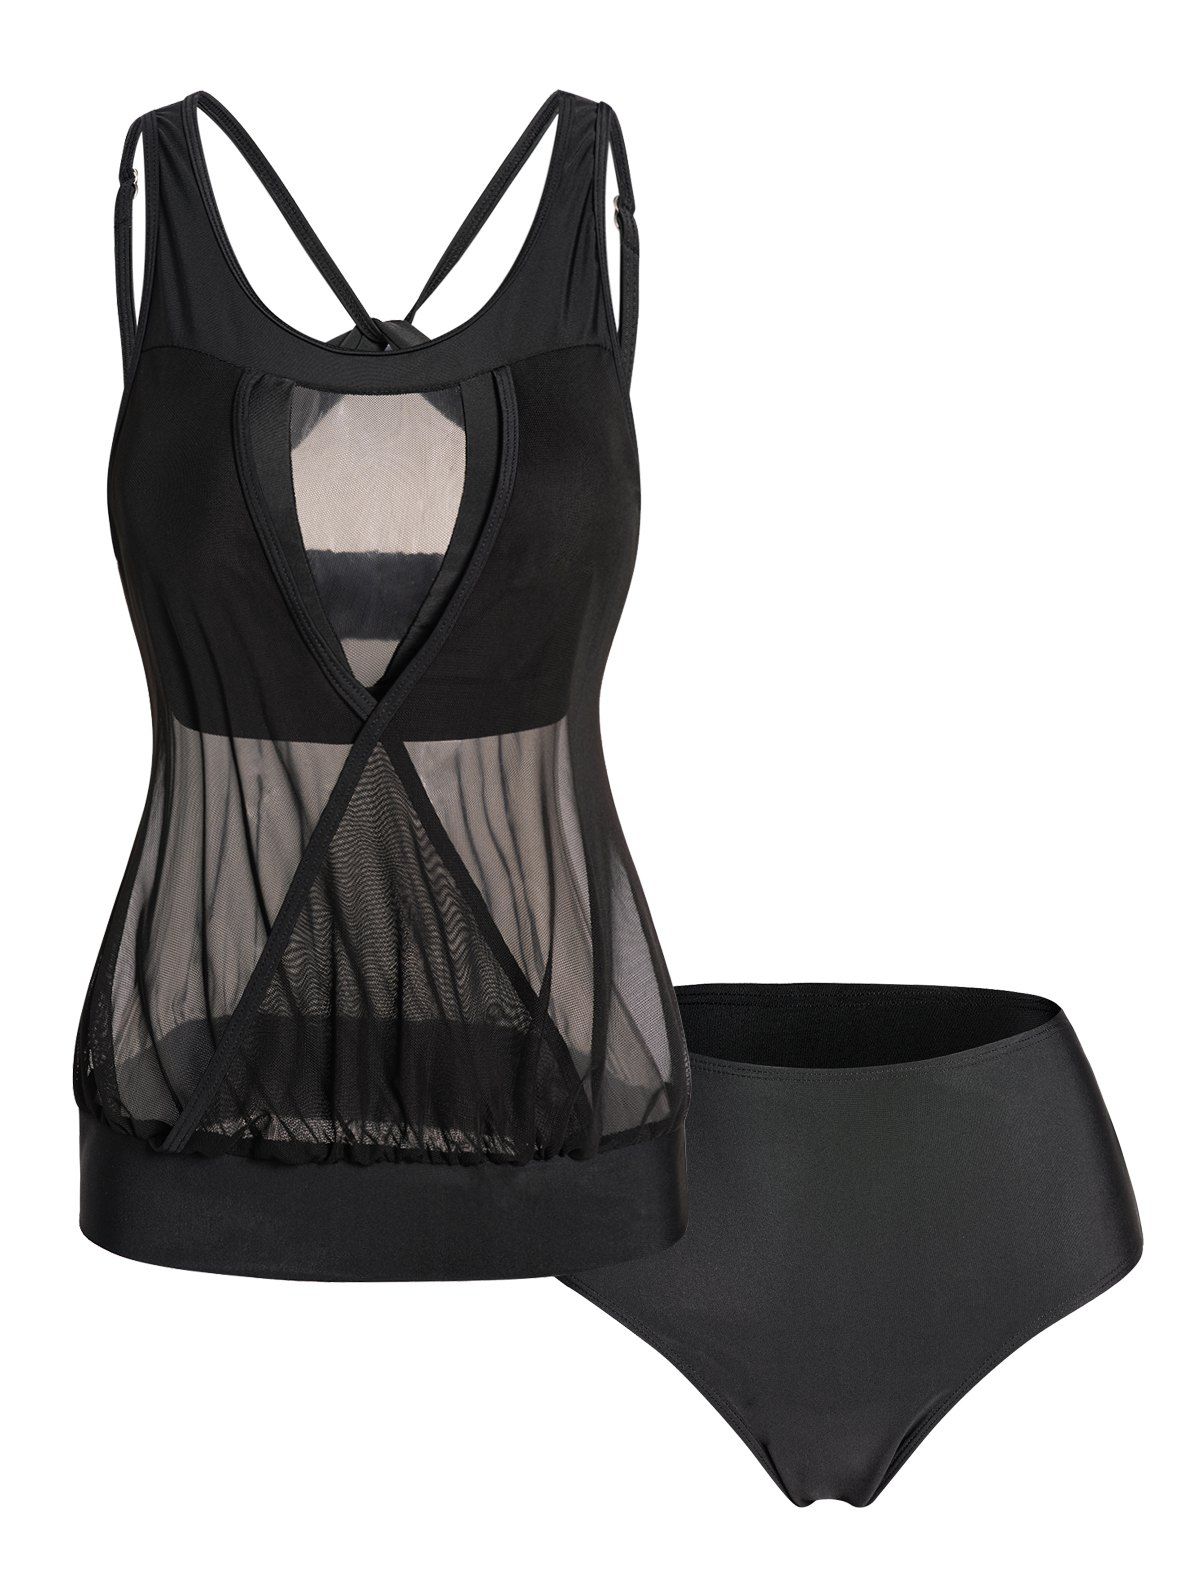 Modest Tankini Swimsuit Surplice Mesh Backless Swimwear Padded Tummy Control Bathing Suit - BLACK XXL